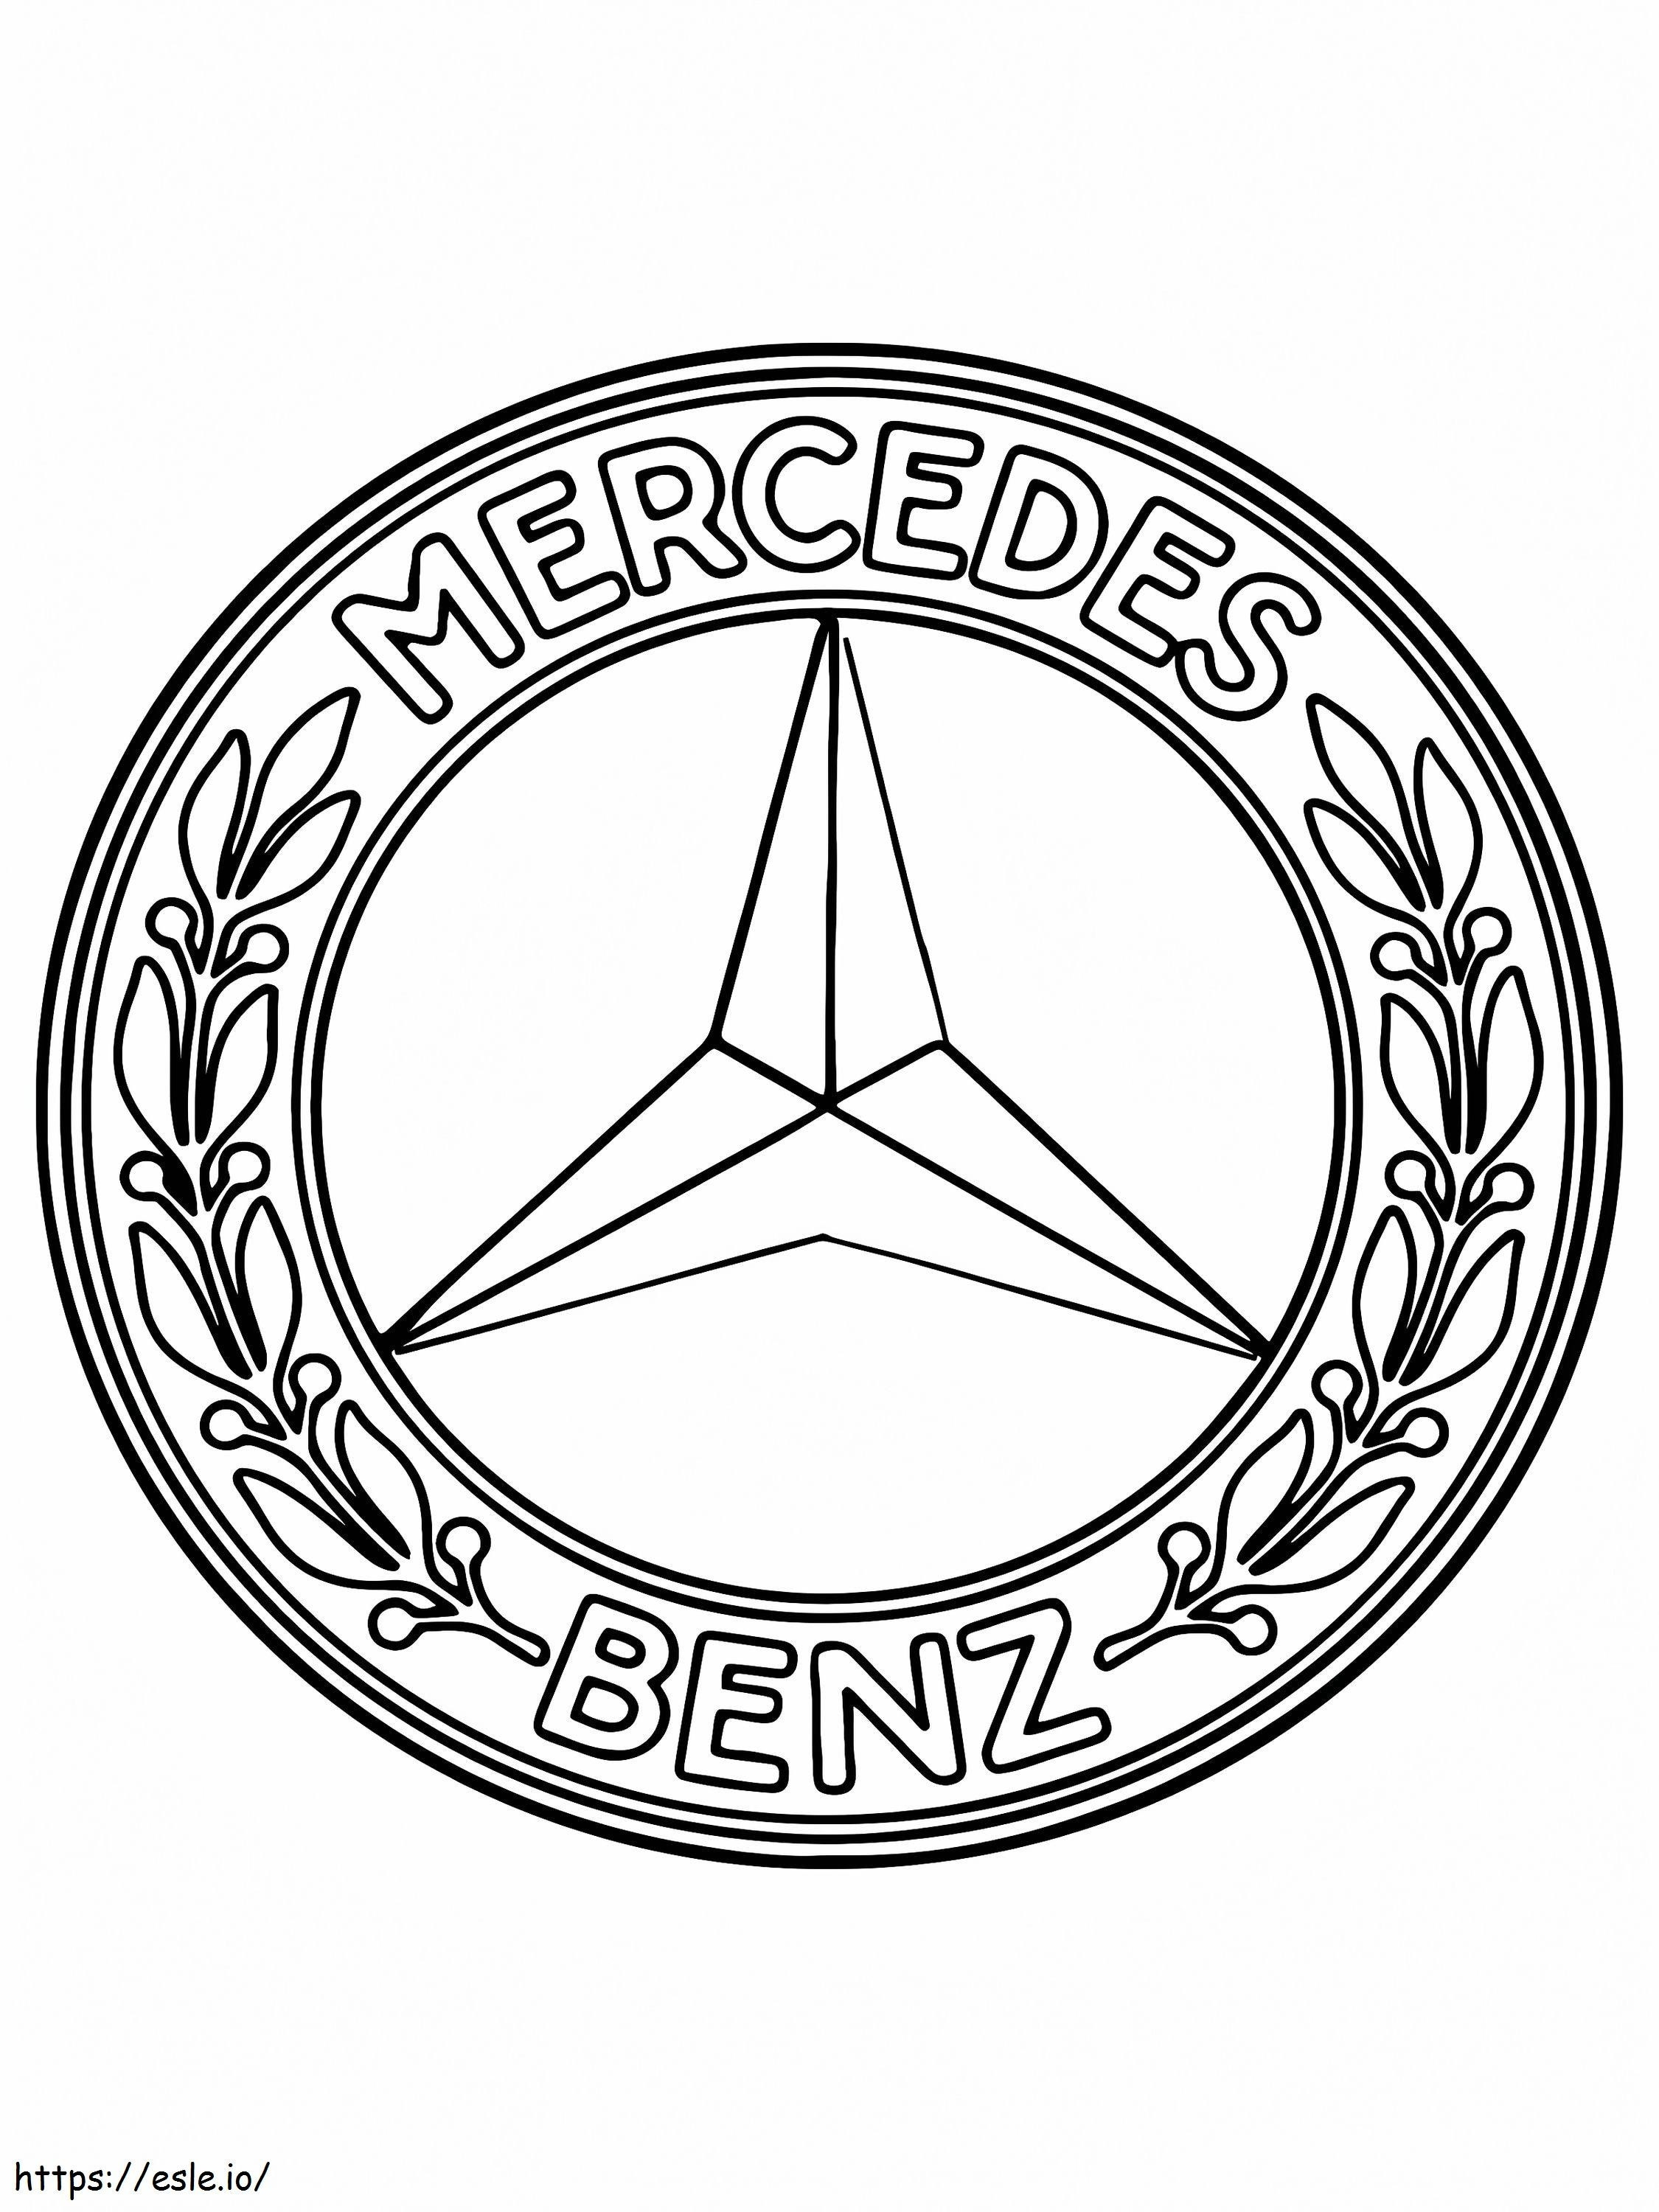 Mercedes Benz araba logosu boyama